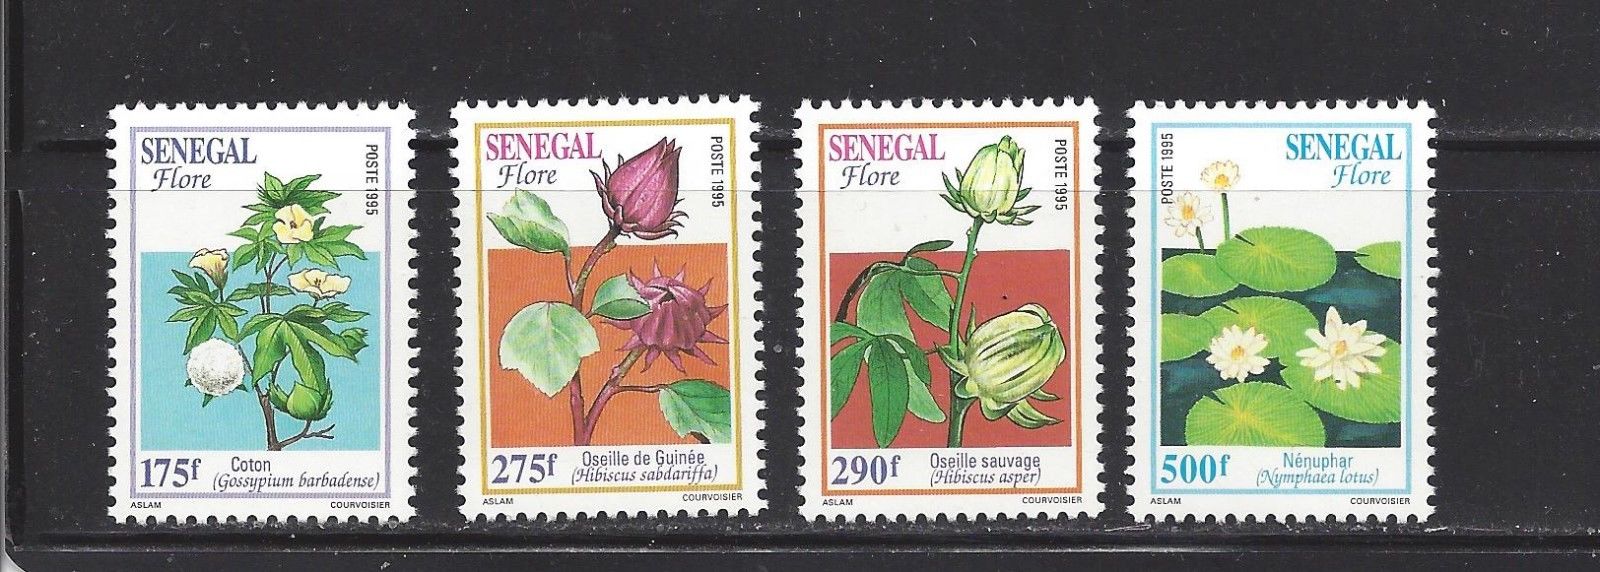 SENEGAL - 1199 - 1202 - MNH - 1996 - FLOWERS